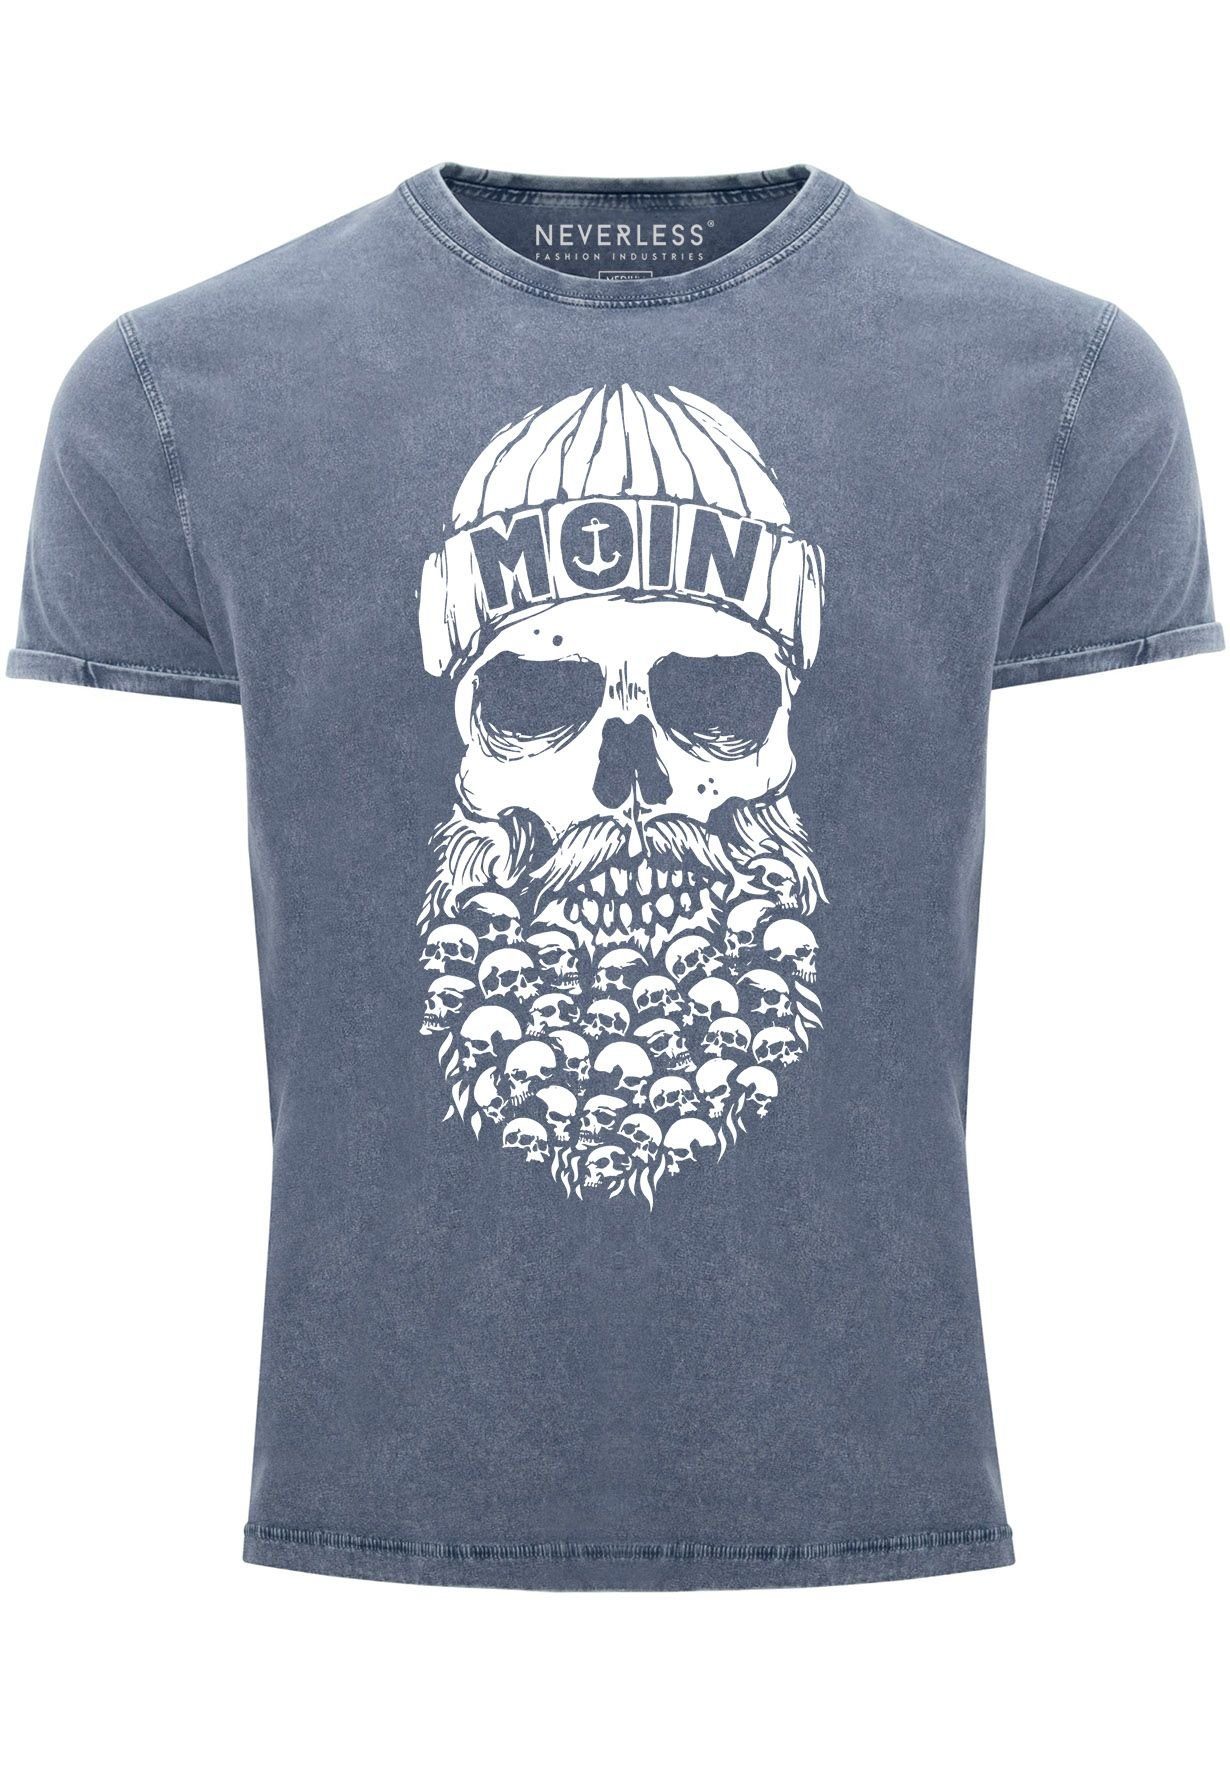 Neverless Print-Shirt Herren Vintage Shirt Totenkopf Nordisch Moin Hamburg Dialekt Skull Ank mit Print blau